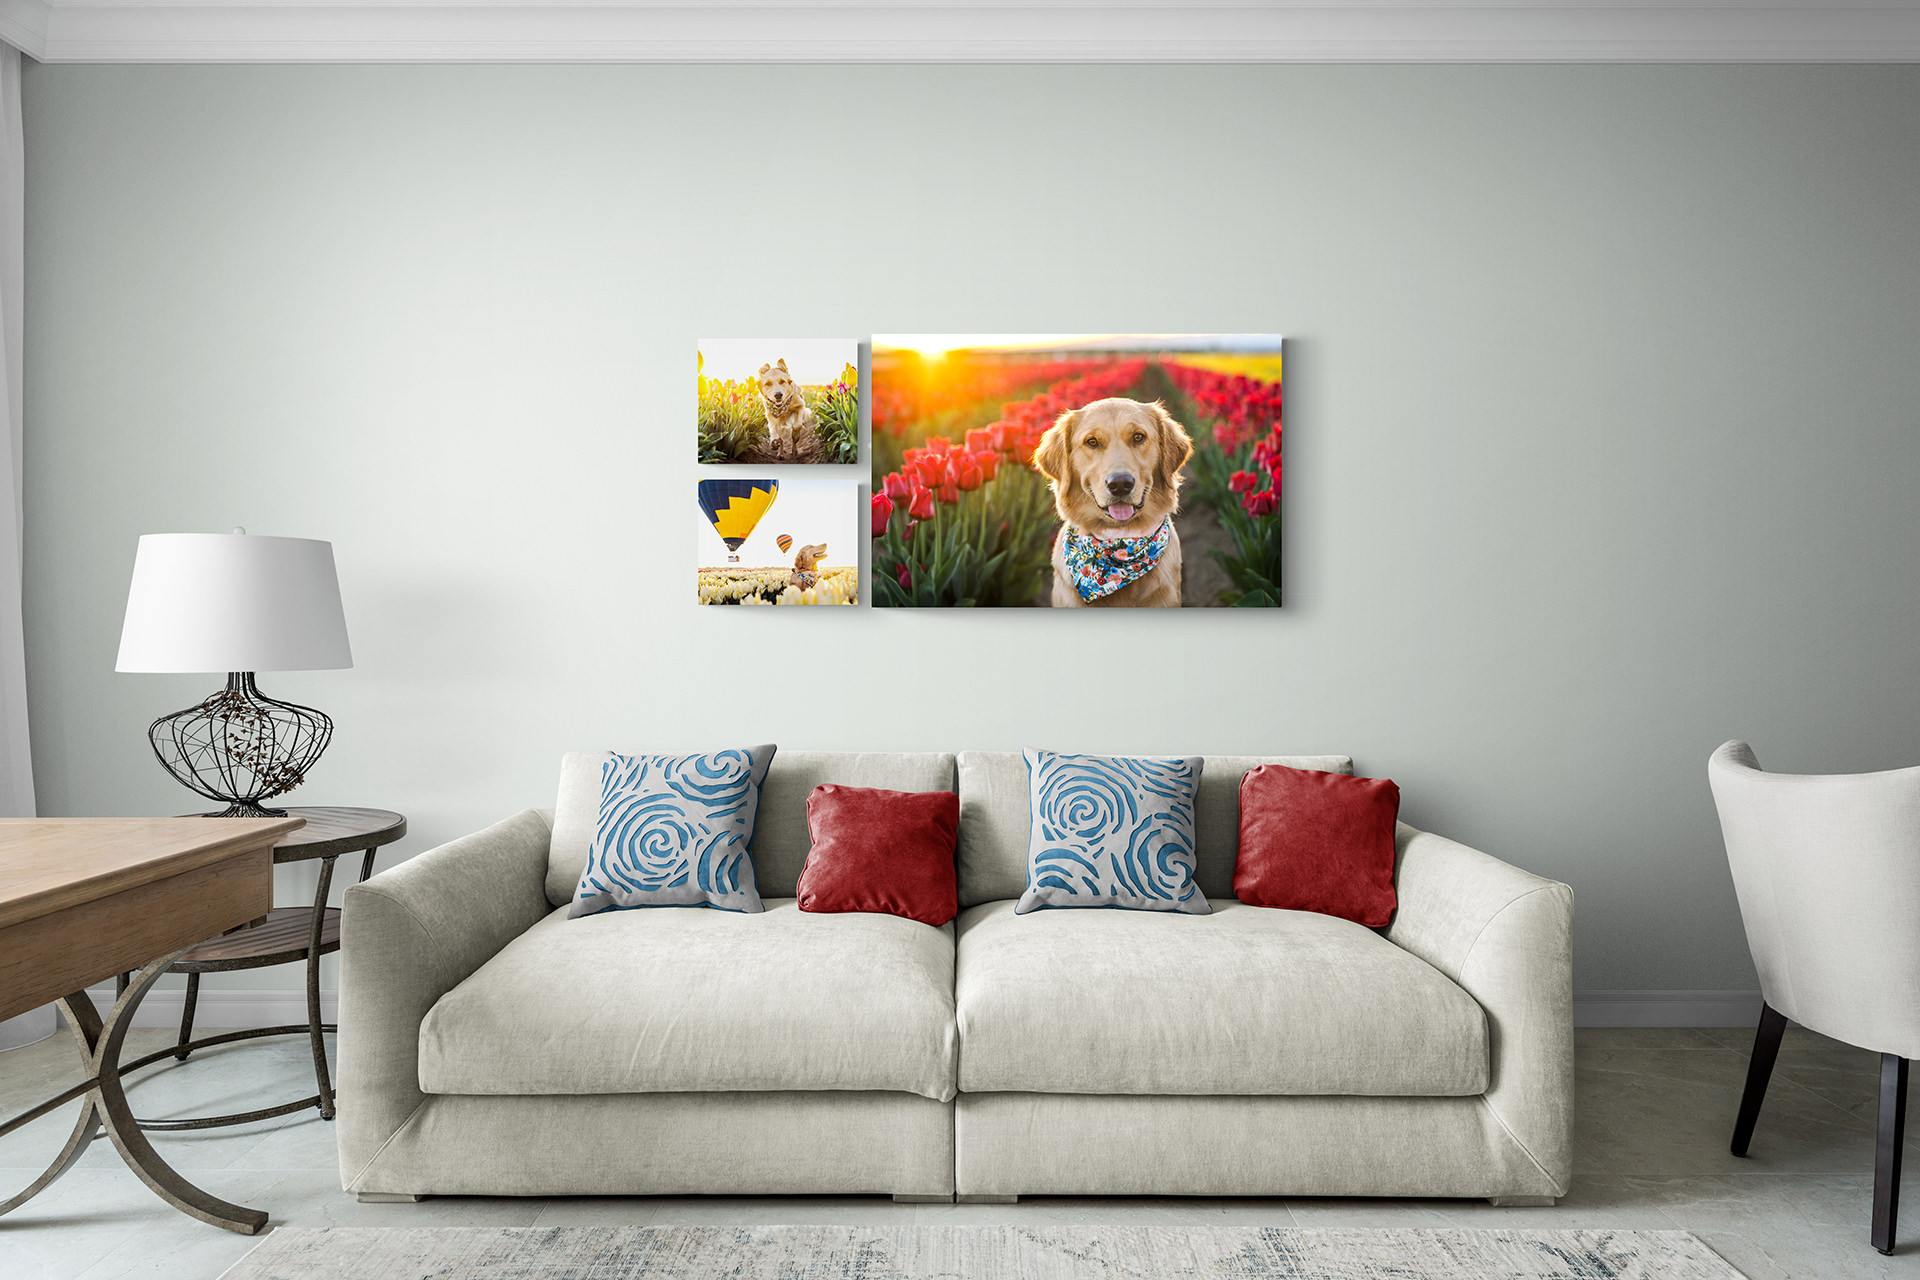 Modern living room with dog-themed wall art.